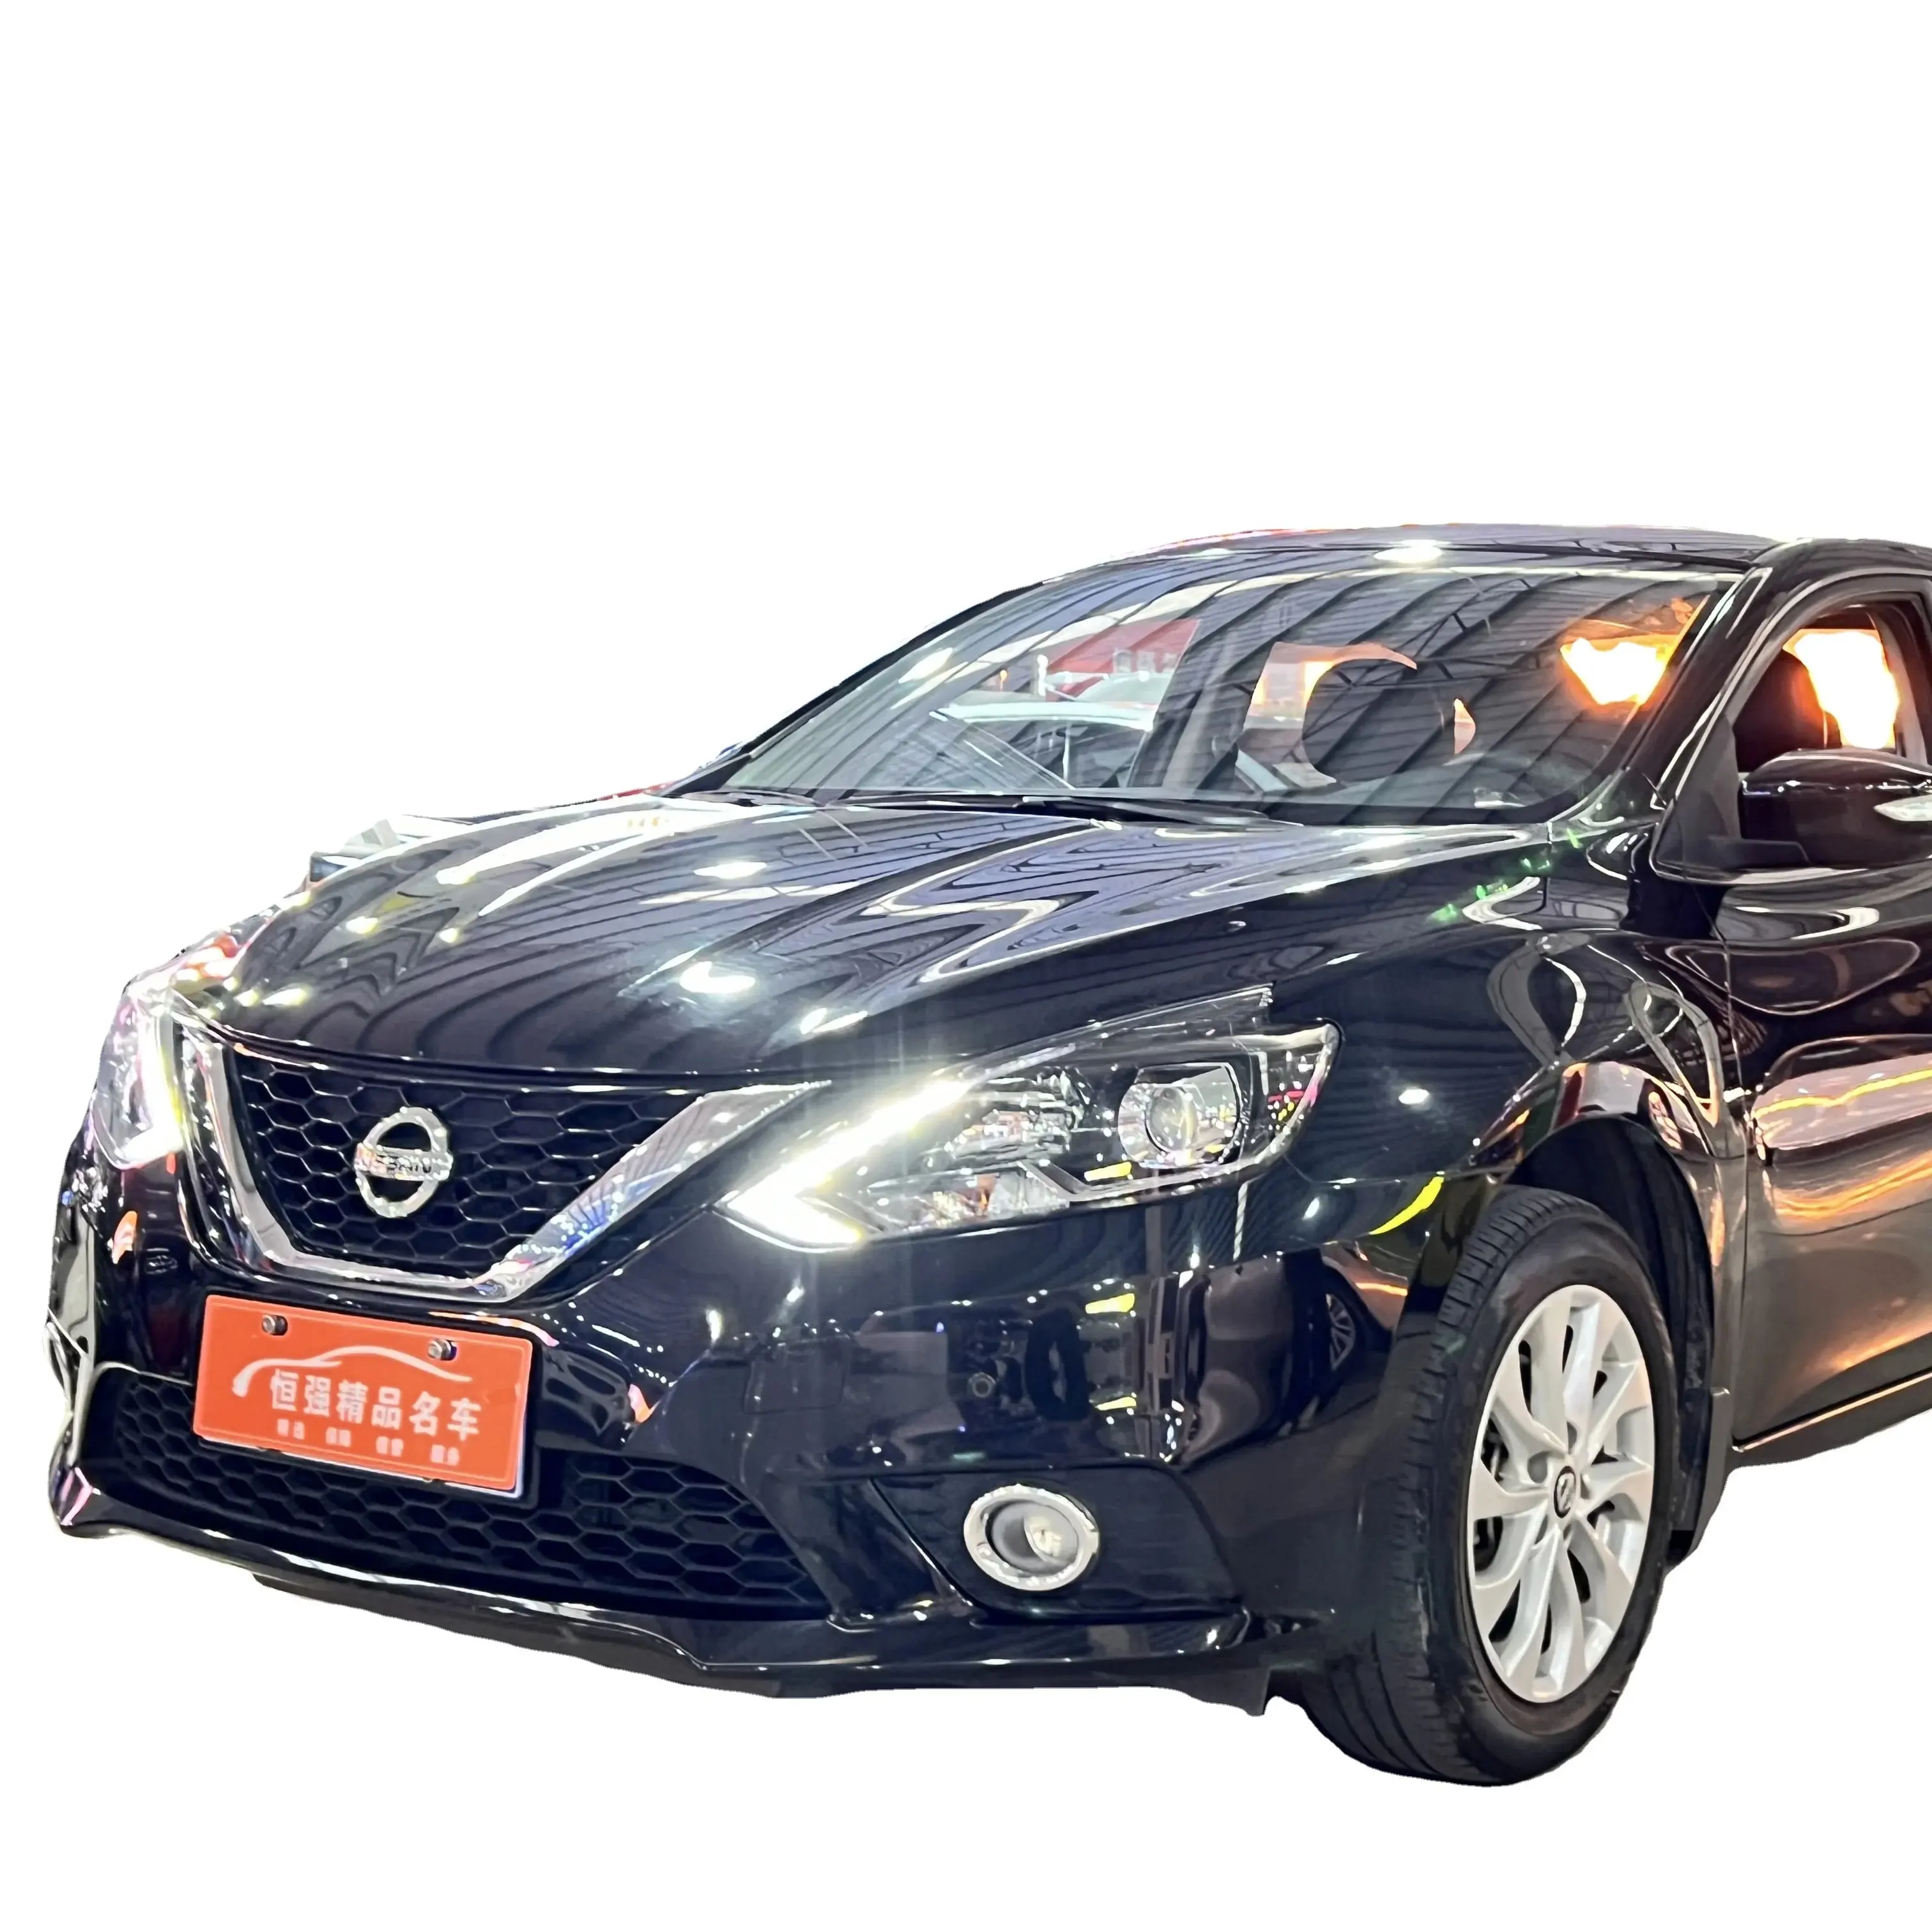 Auto usate per Nissan Sylphy 2018 1.6XV CVT Premier Edition carros usados y baratos